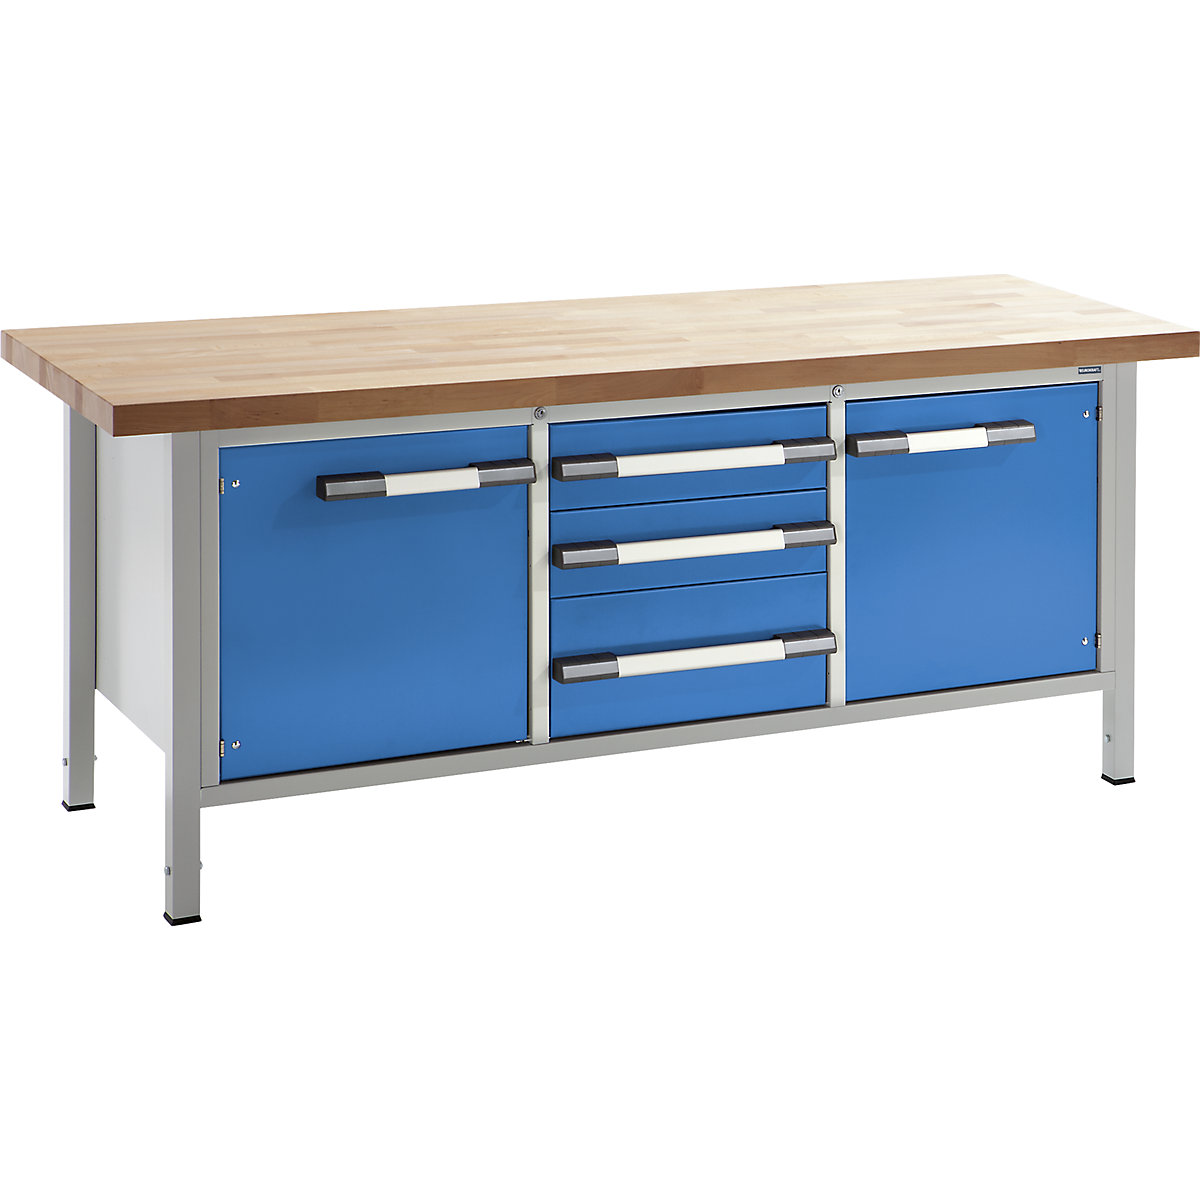 EUROKRAFTpro – Height-adjustable workbench, frame construction, width 2000 mm, 3 drawers, 2 doors, grey / blue